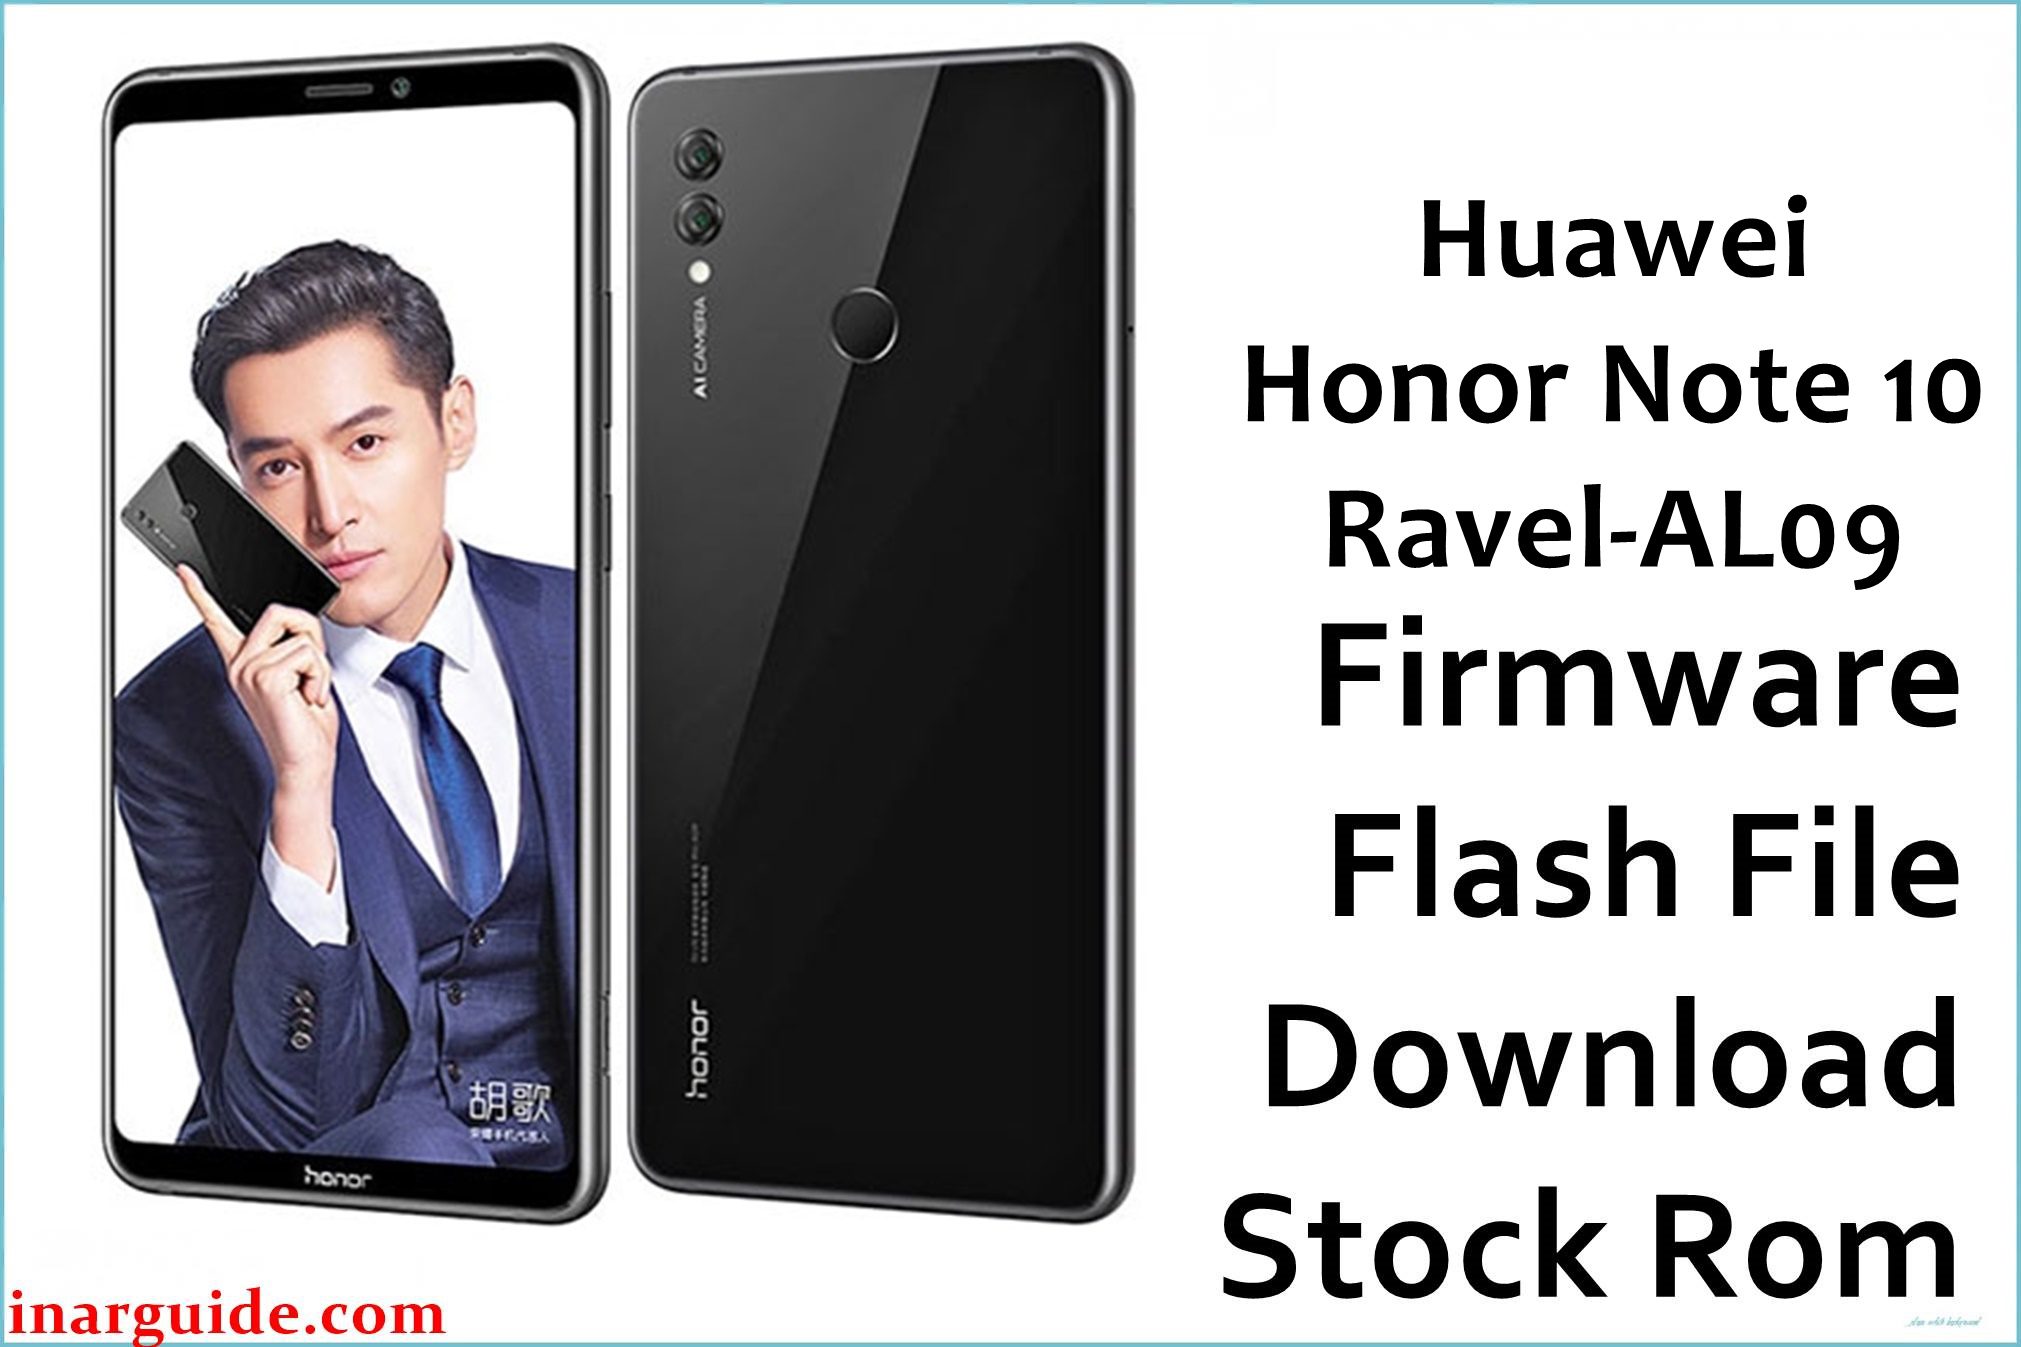 Huawei Honor Note 10 Ravel AL09